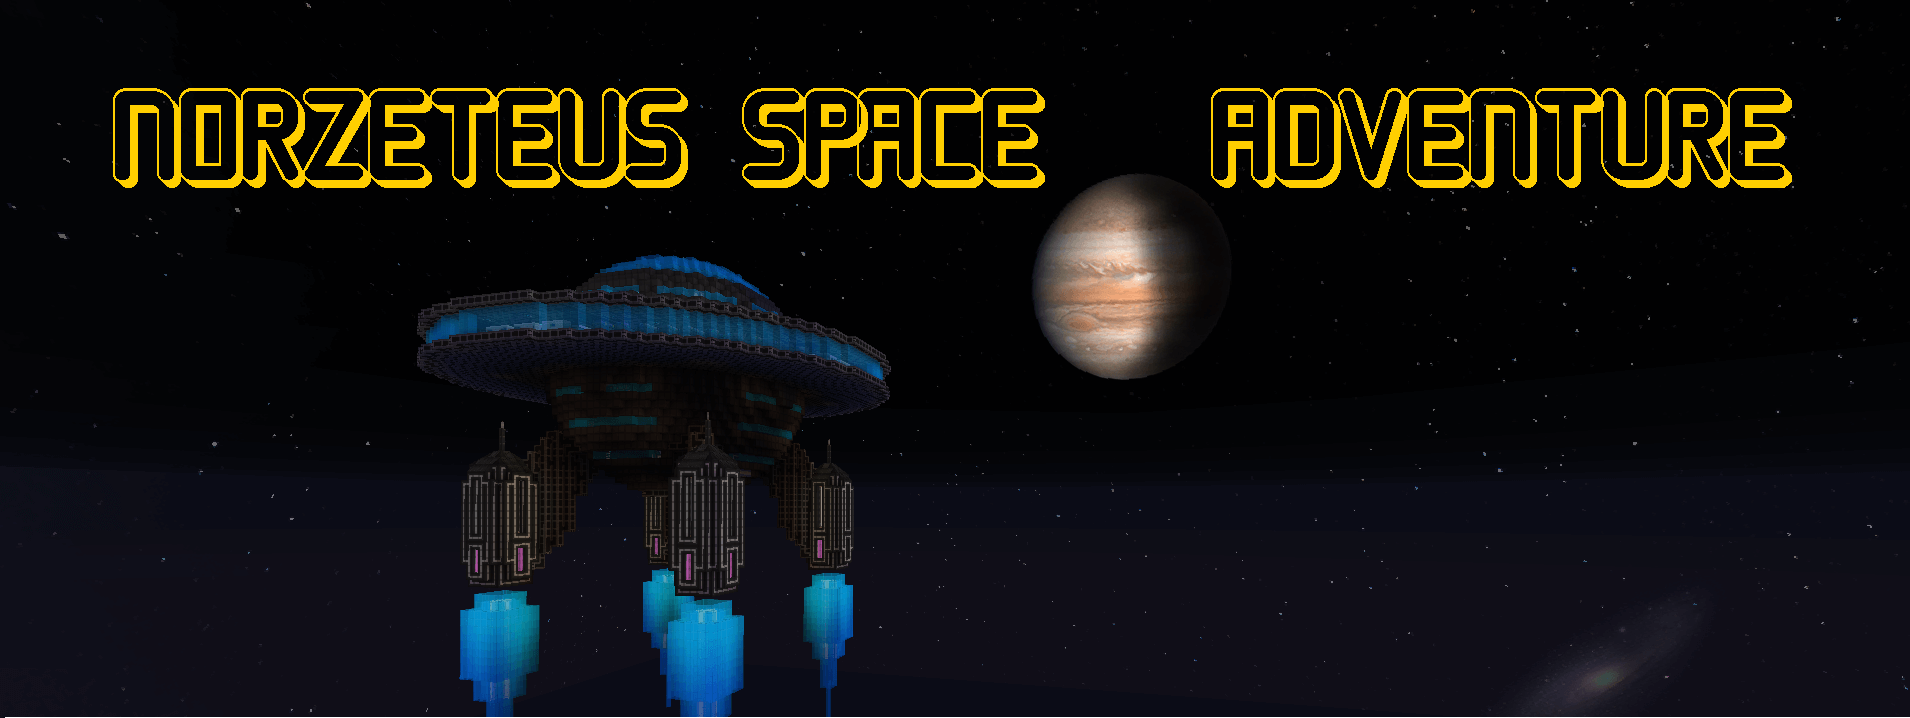 Norzeteus Space reduced скриншот 1